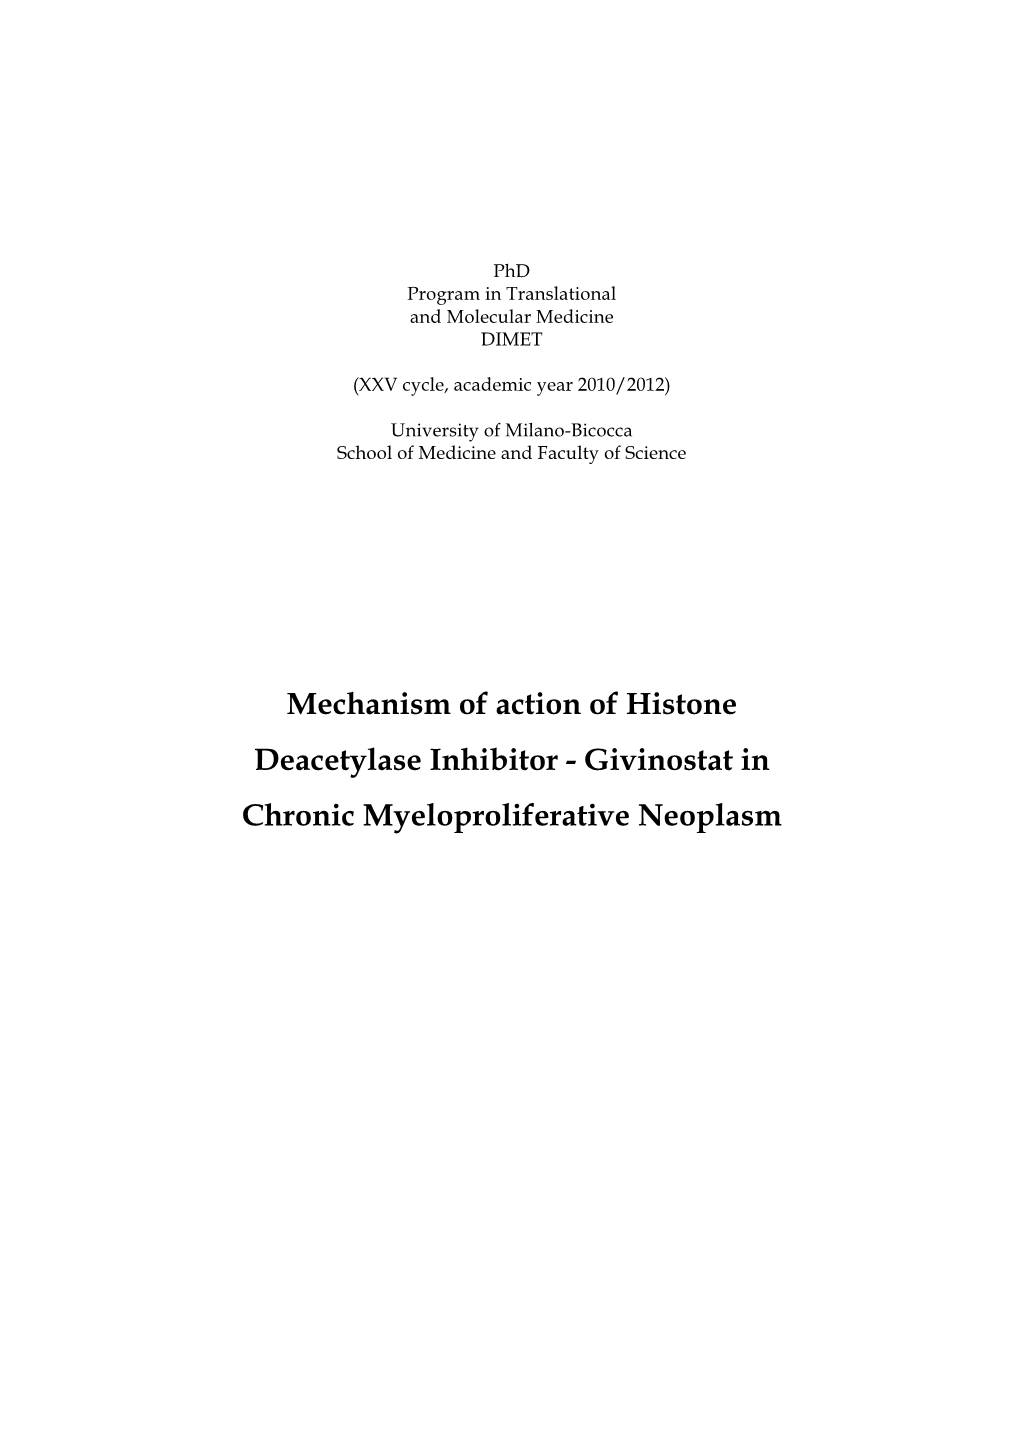 Mechanism of Action of Histone Deacetylase Inhibitor - Givinostat in Chronic Myeloproliferative Neoplasm